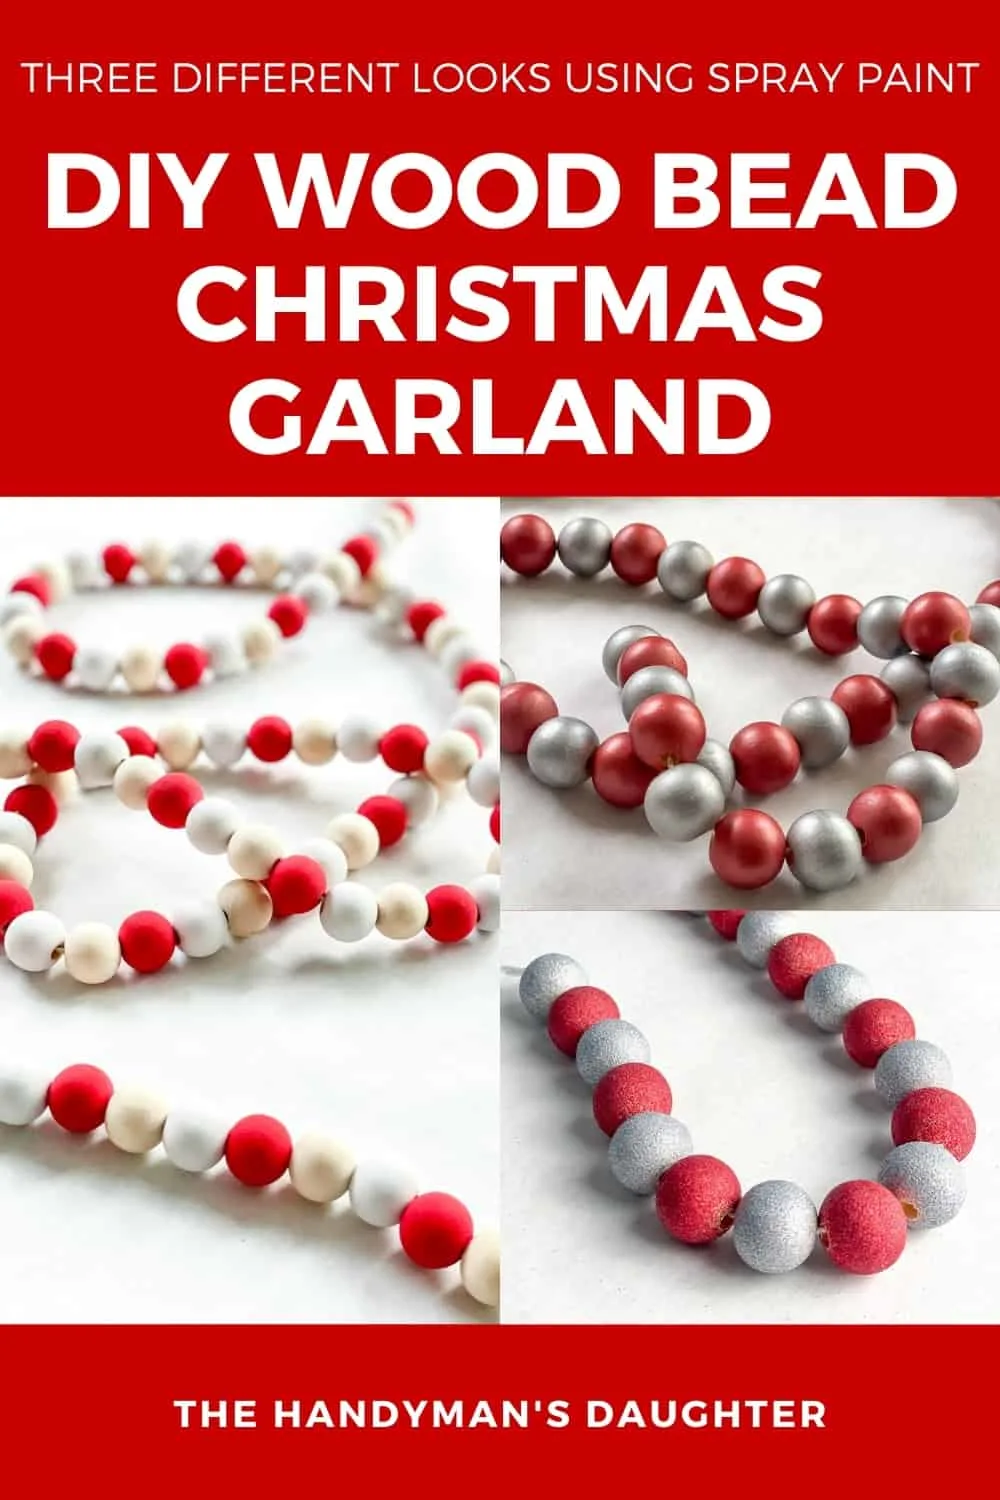 DIY wood bead Christmas garland - 3 different looks using spray paint